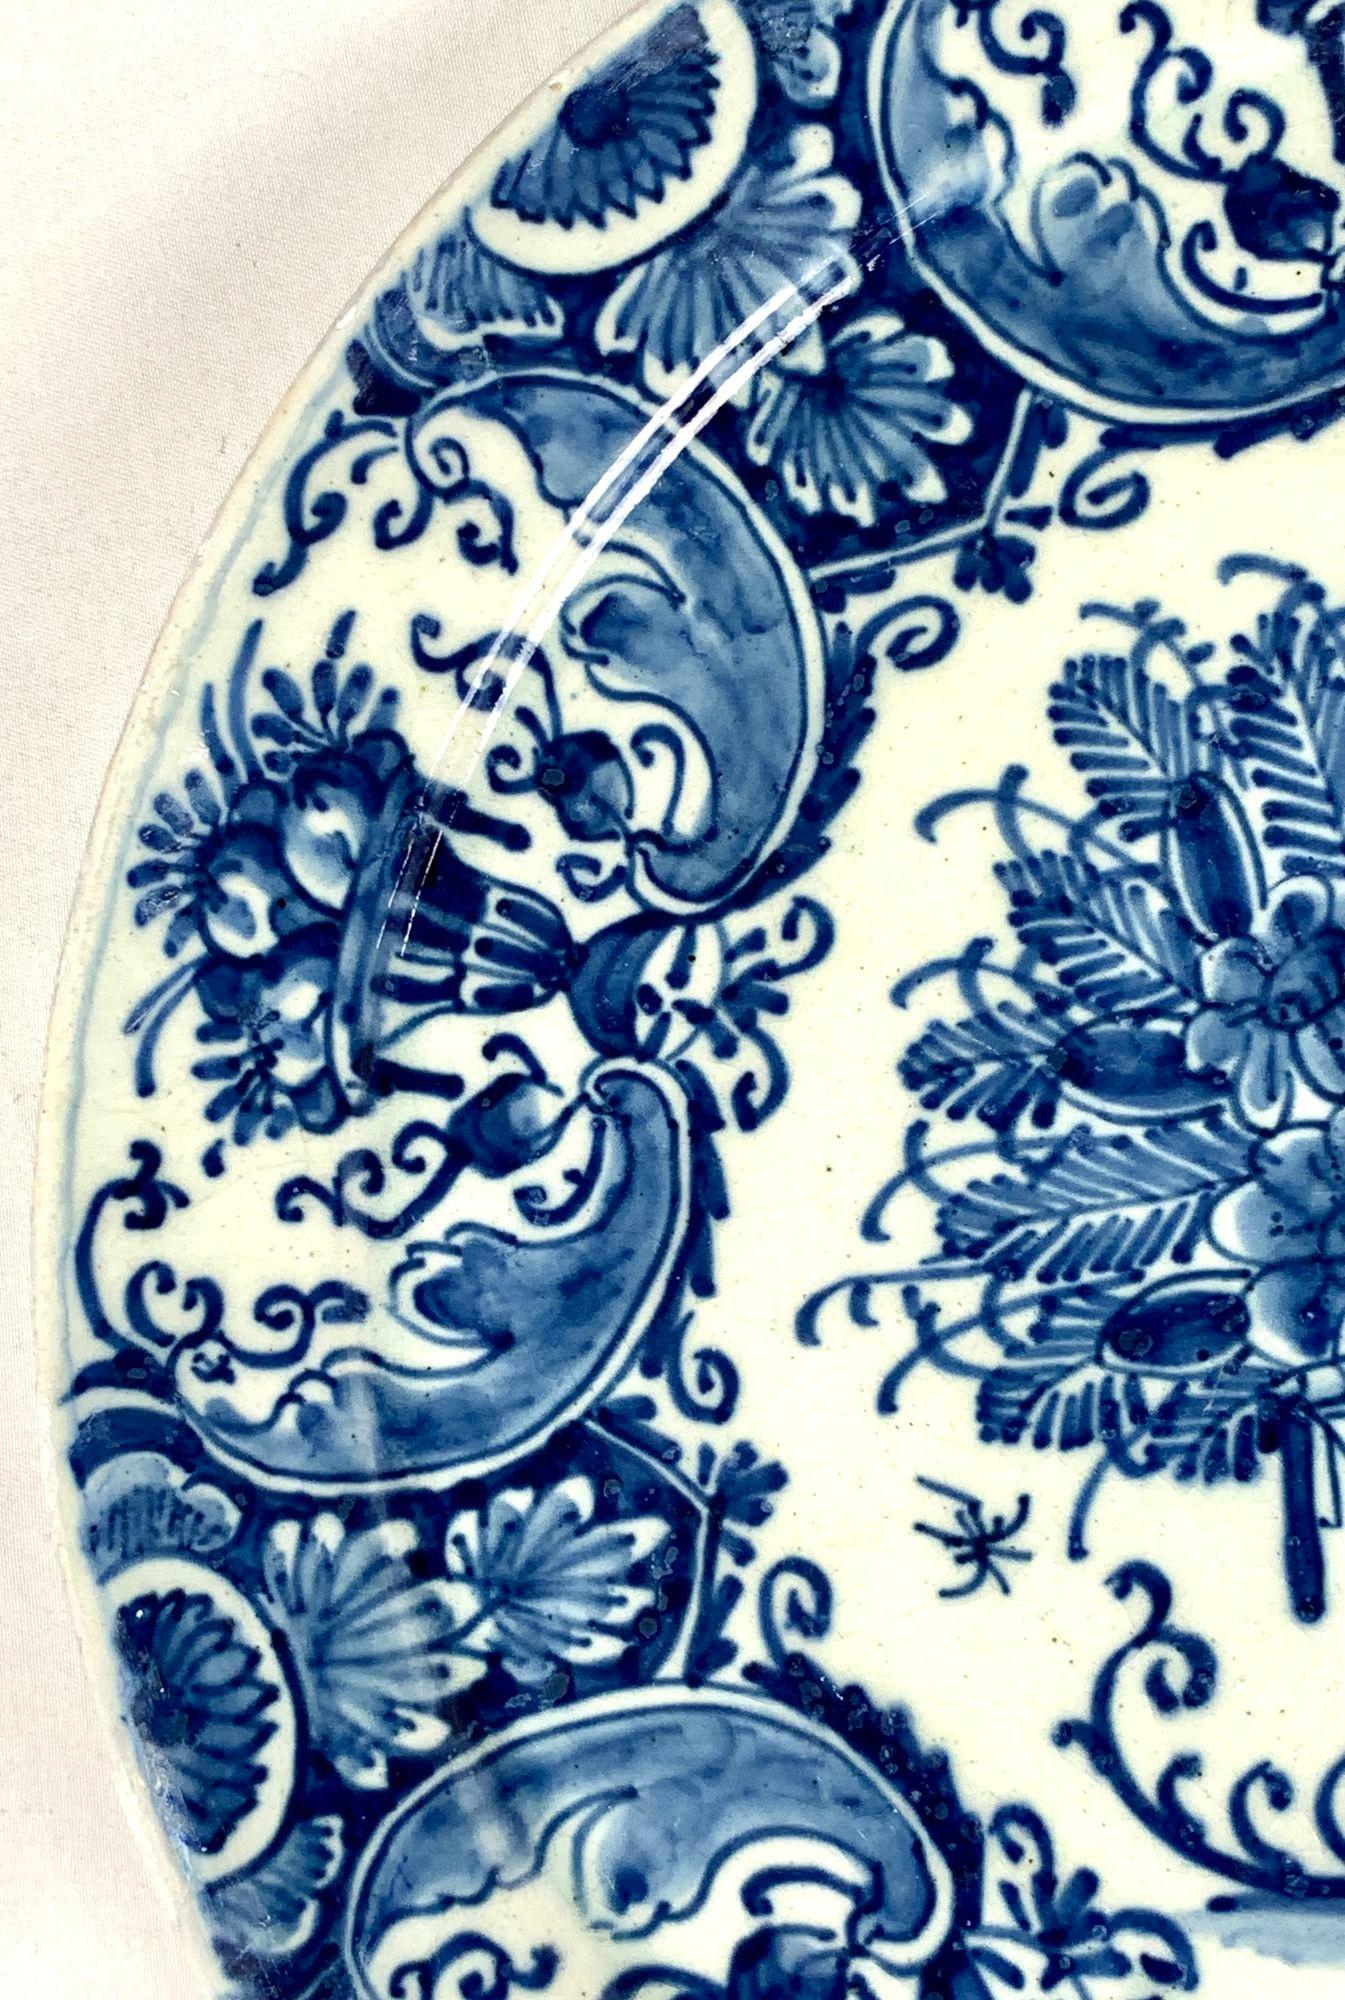 Set Four Antique Blue and White Delft Plates Circa 1760-1770 10.25